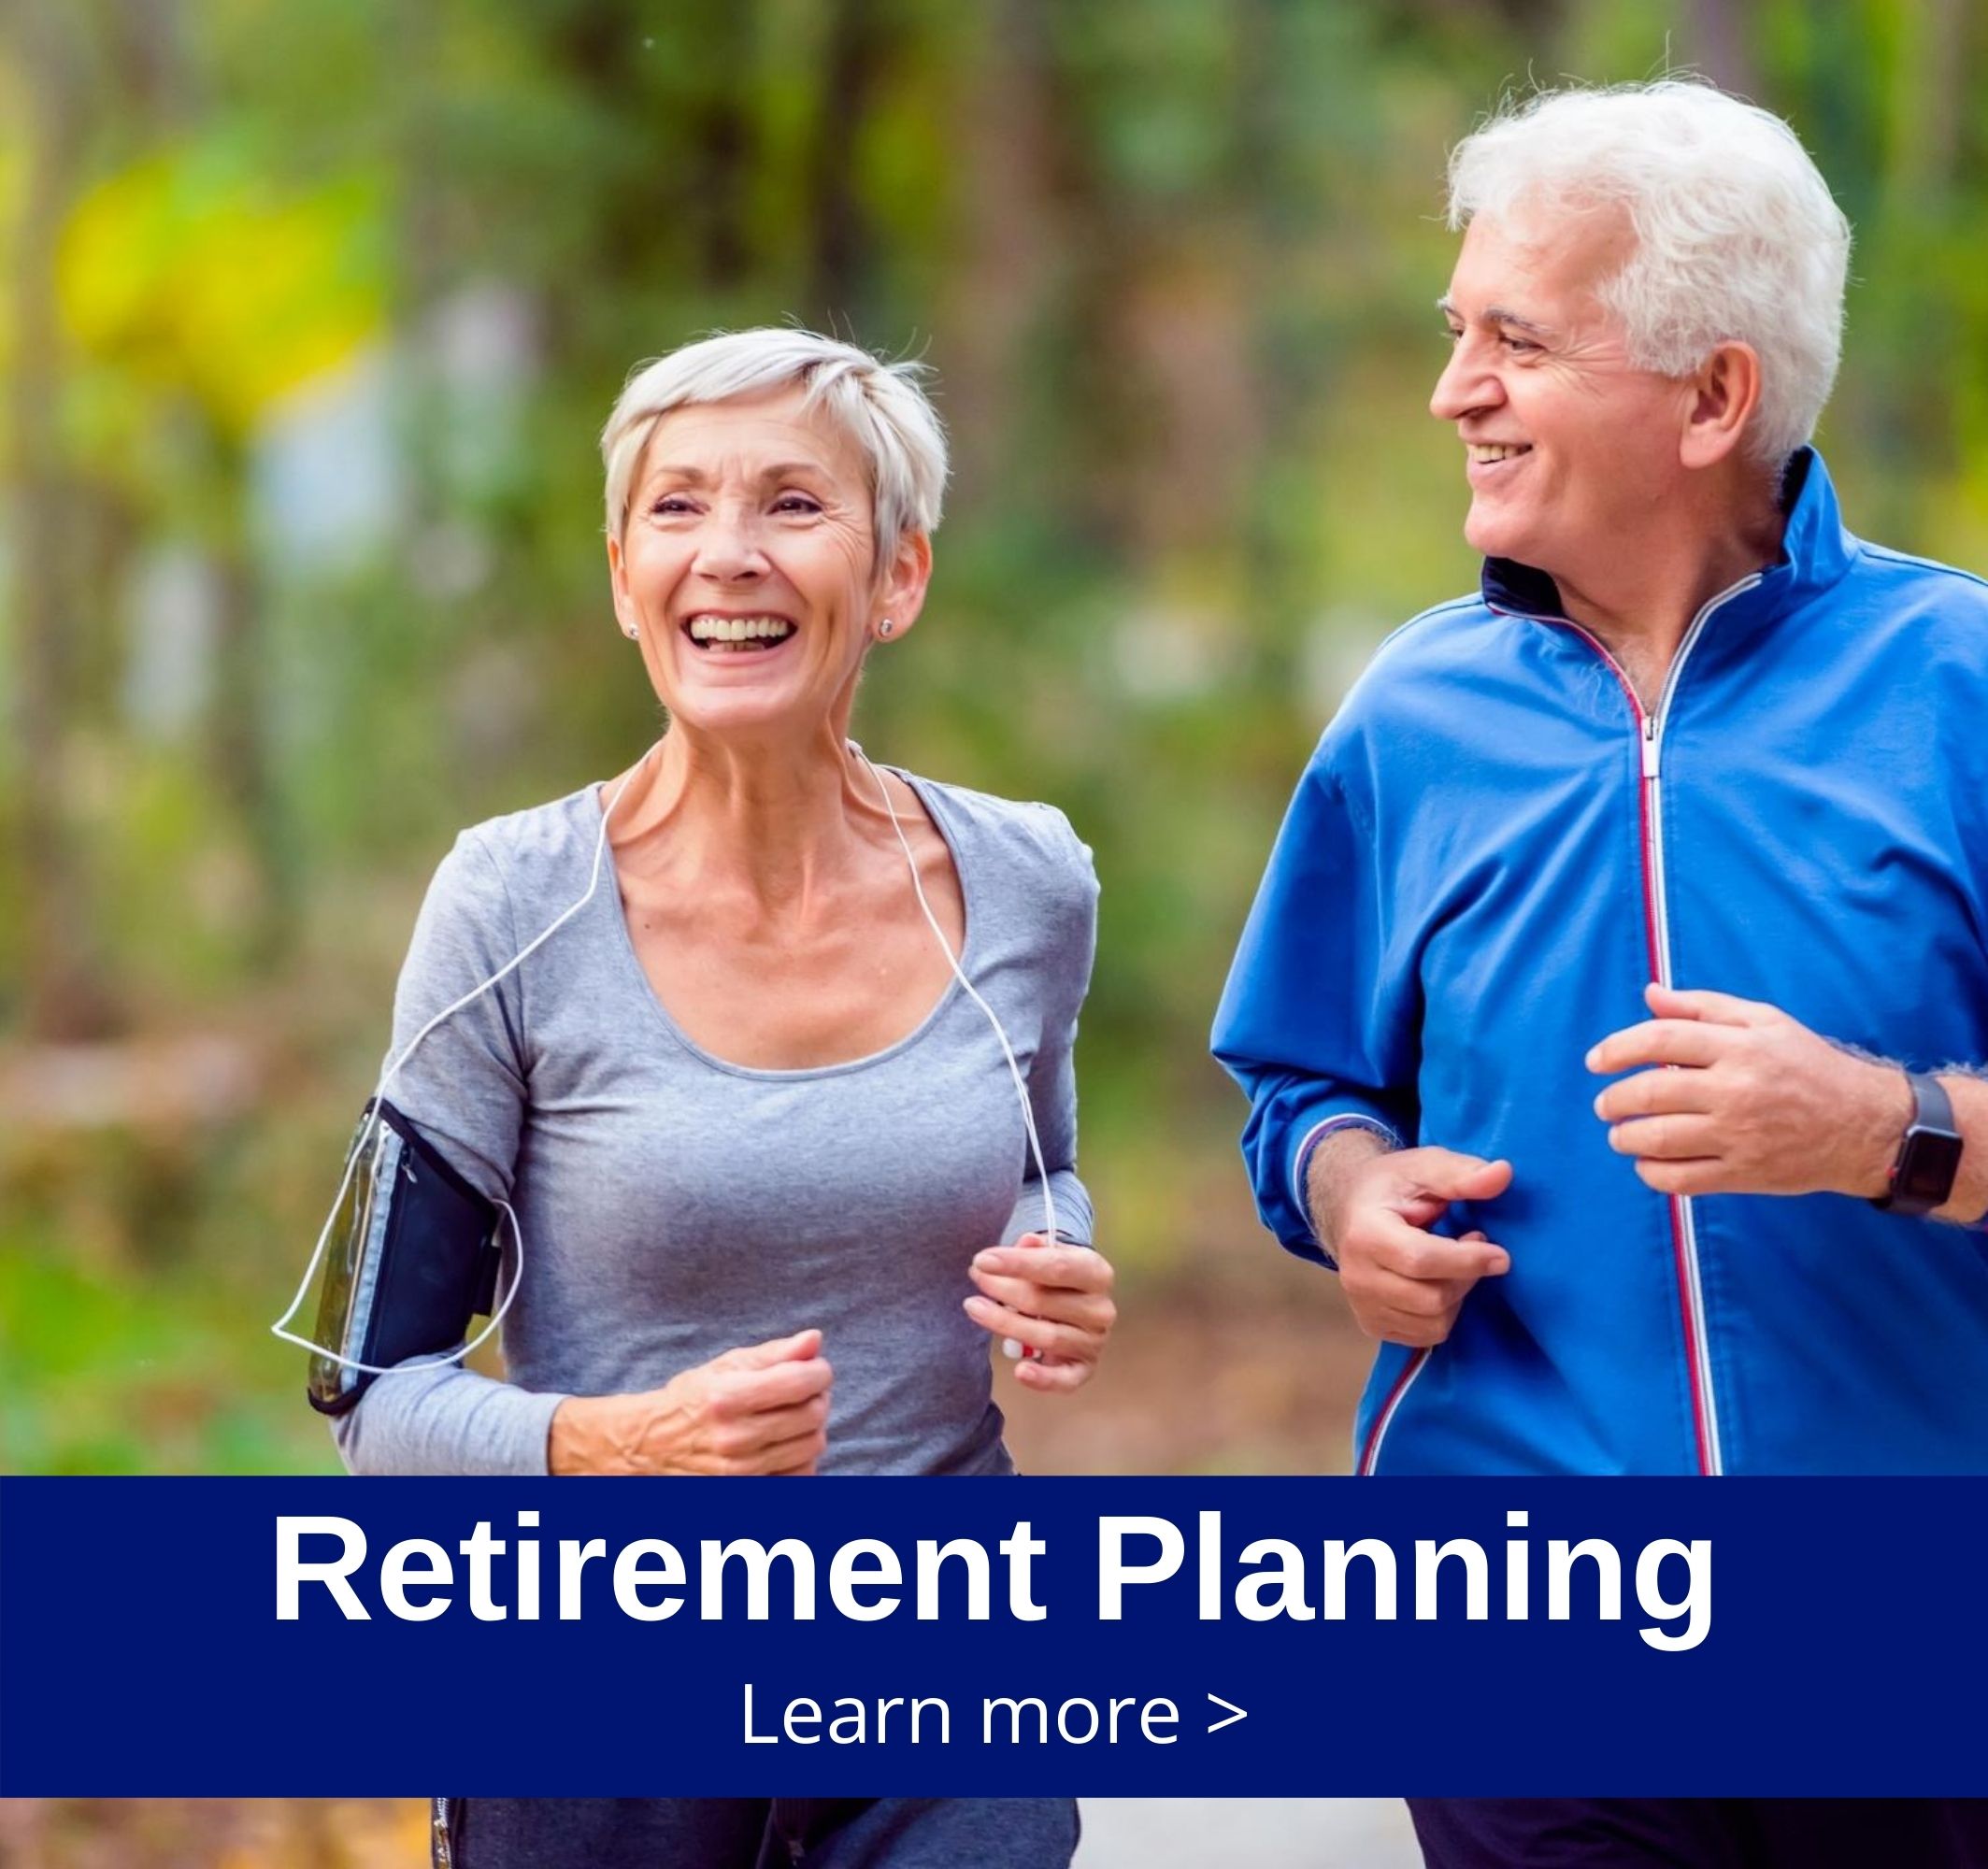 Retirement planning services